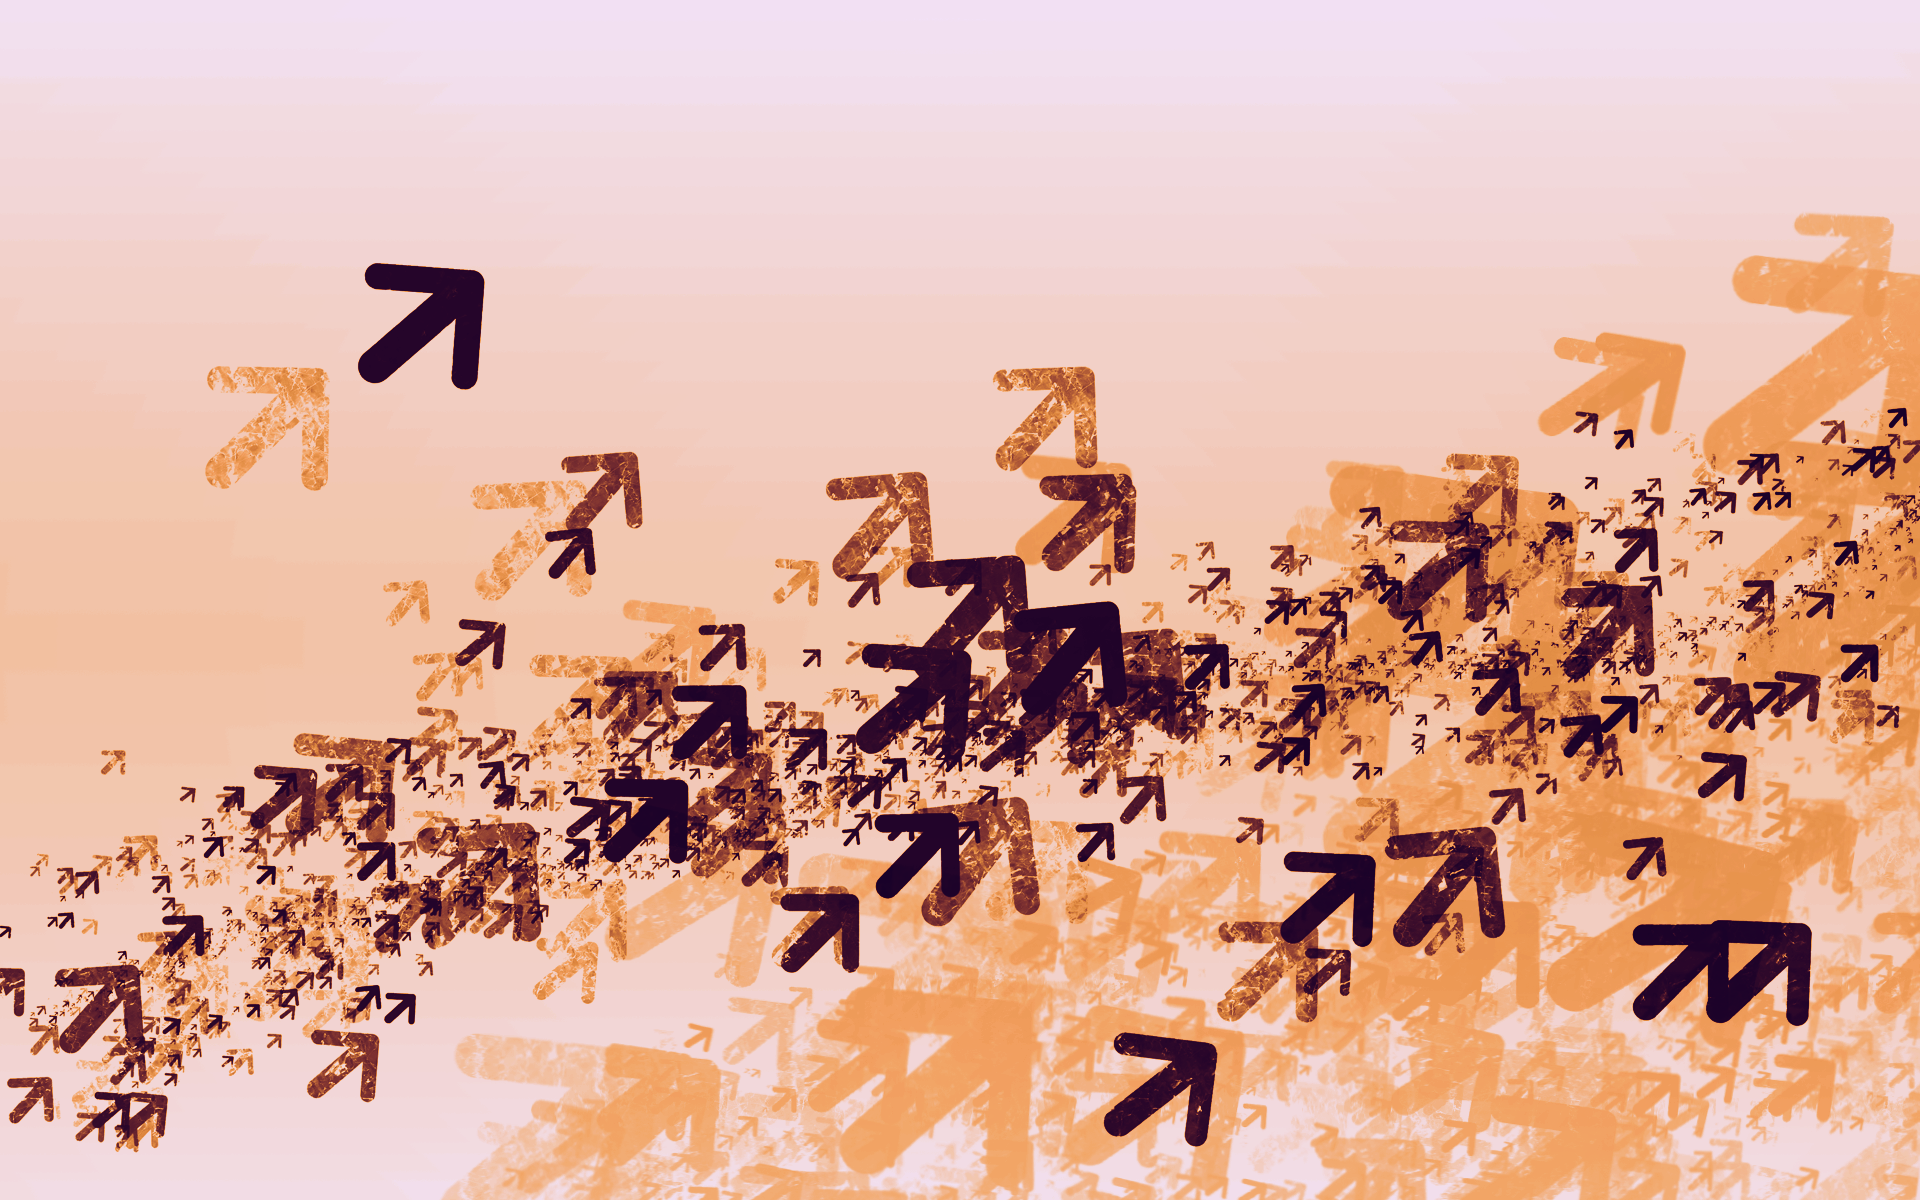 abstract, swarm, flock, arrows - desktop wallpaper